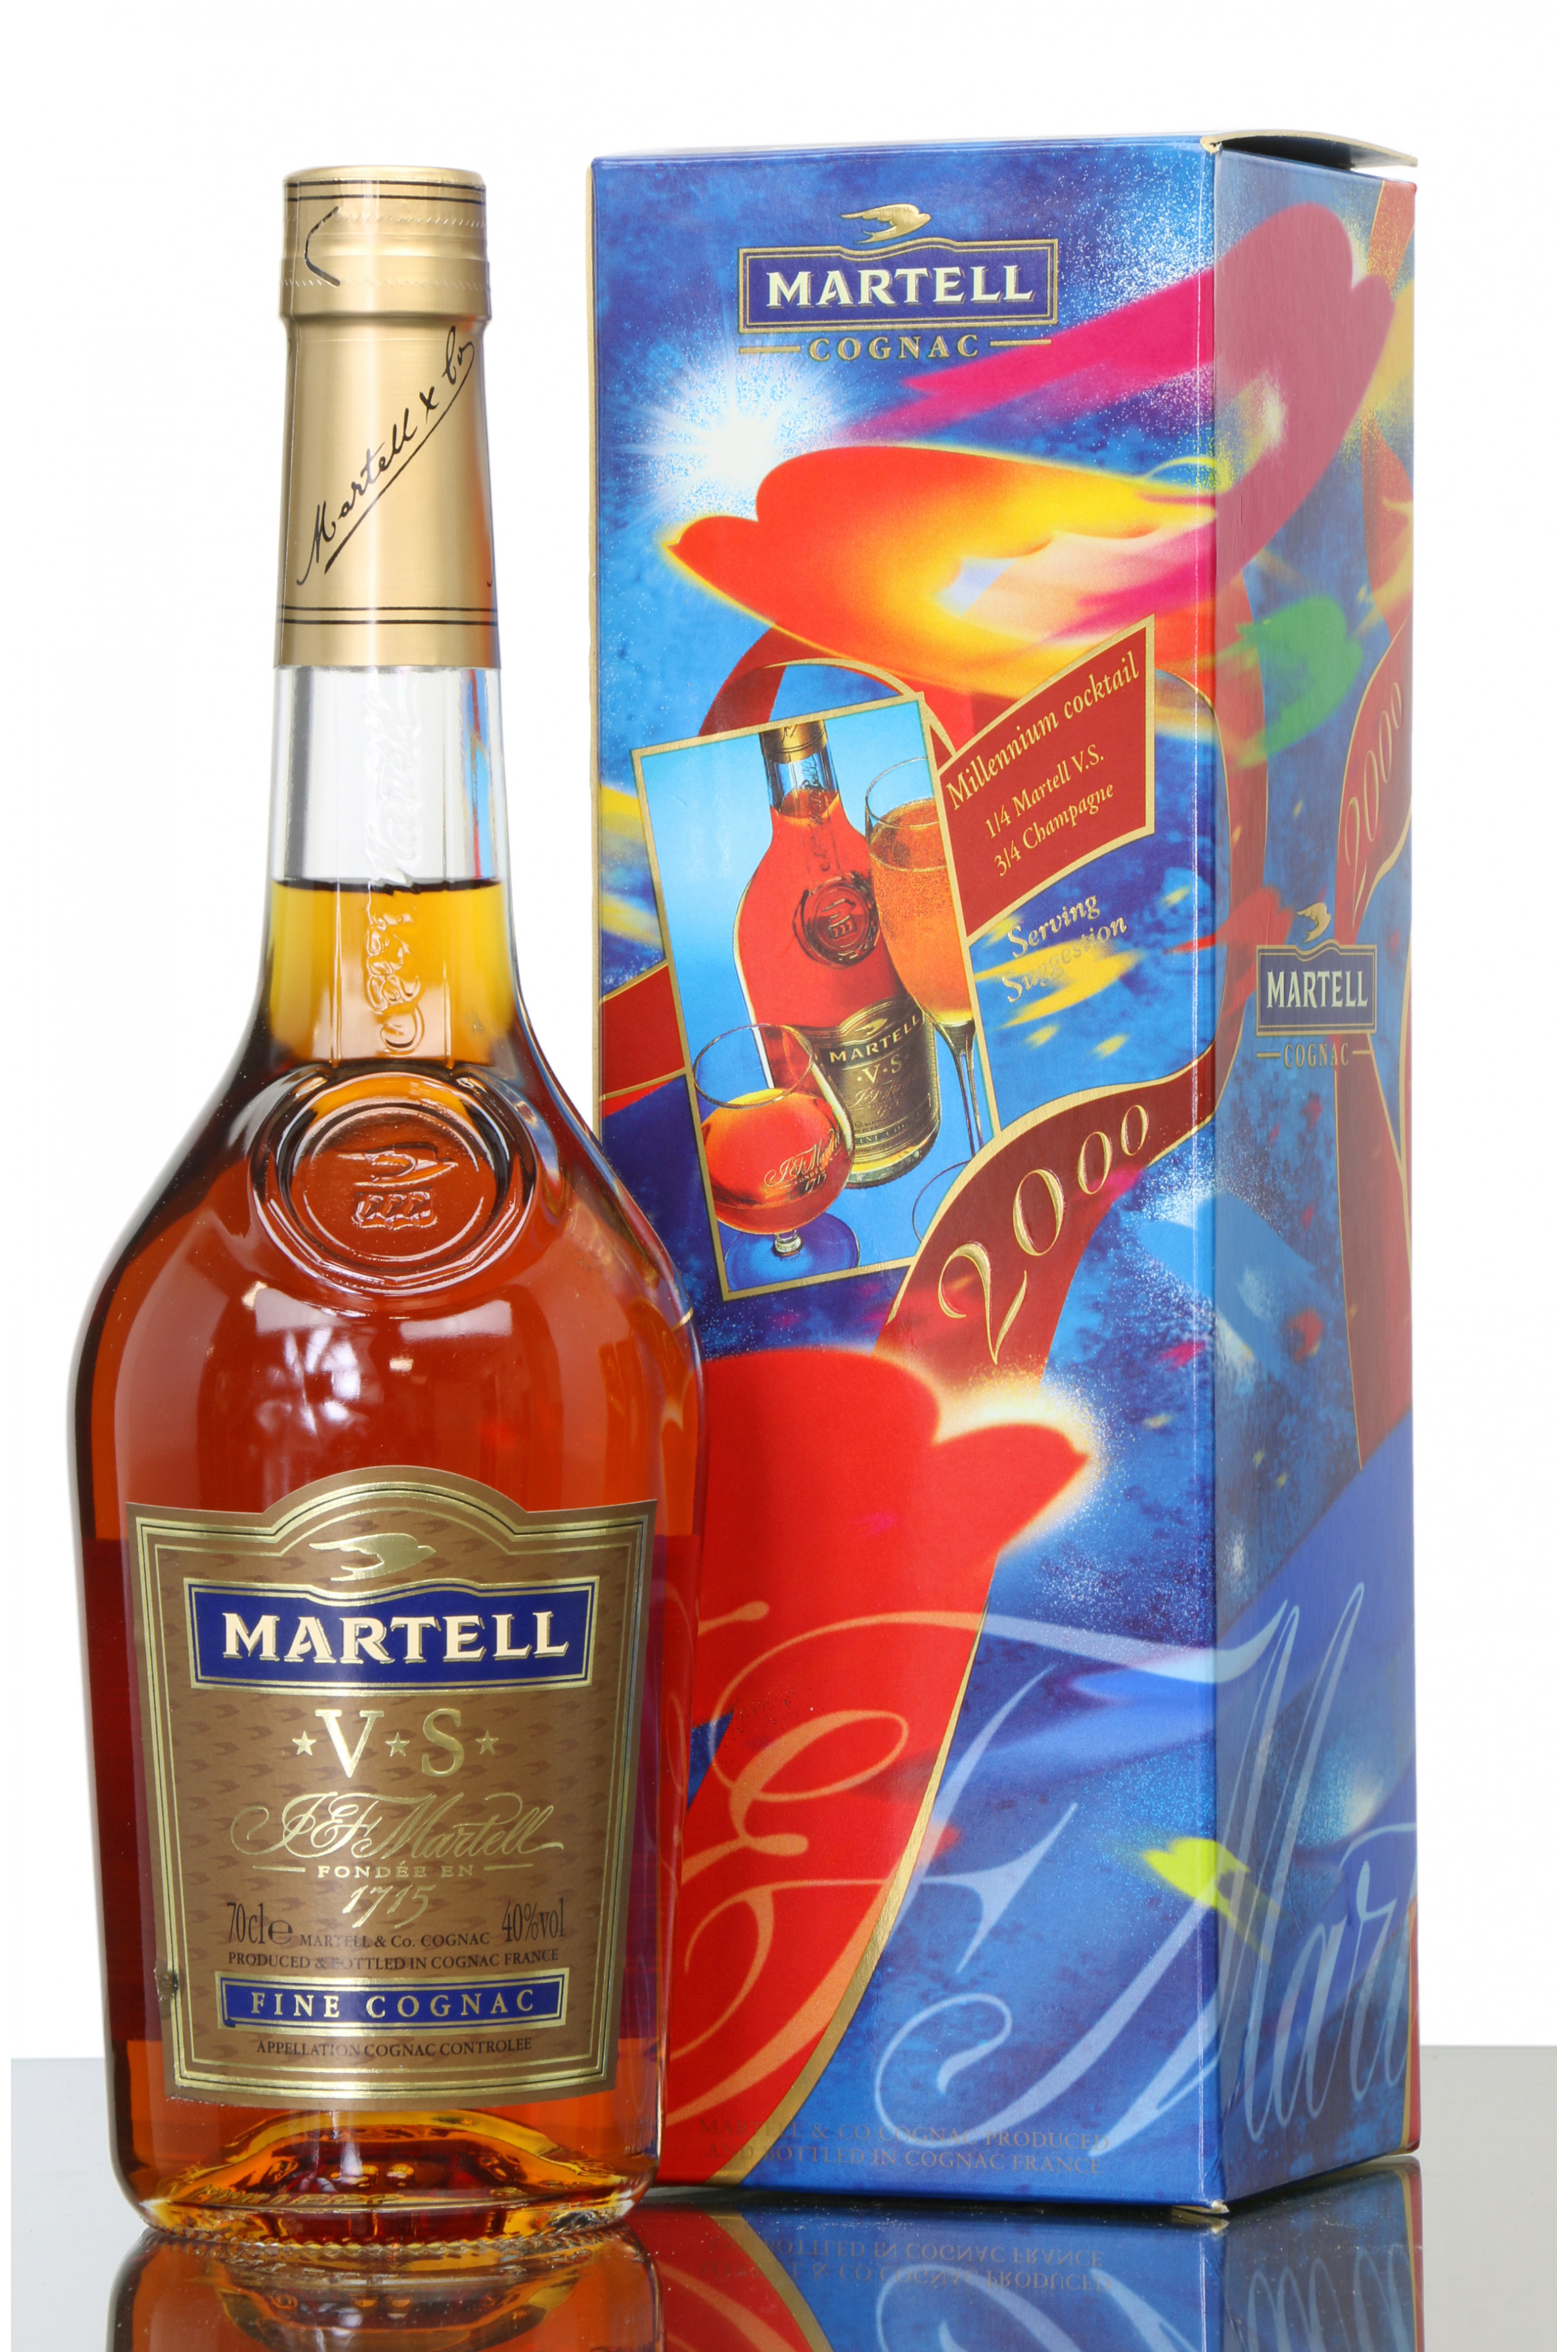 Мартель коньяк цена 0.5. Виски Мартель. Martell v s Fine Cognac. Коньяк Мартель 0,75 250 р. Martell коньяк 300 year Anniversary.